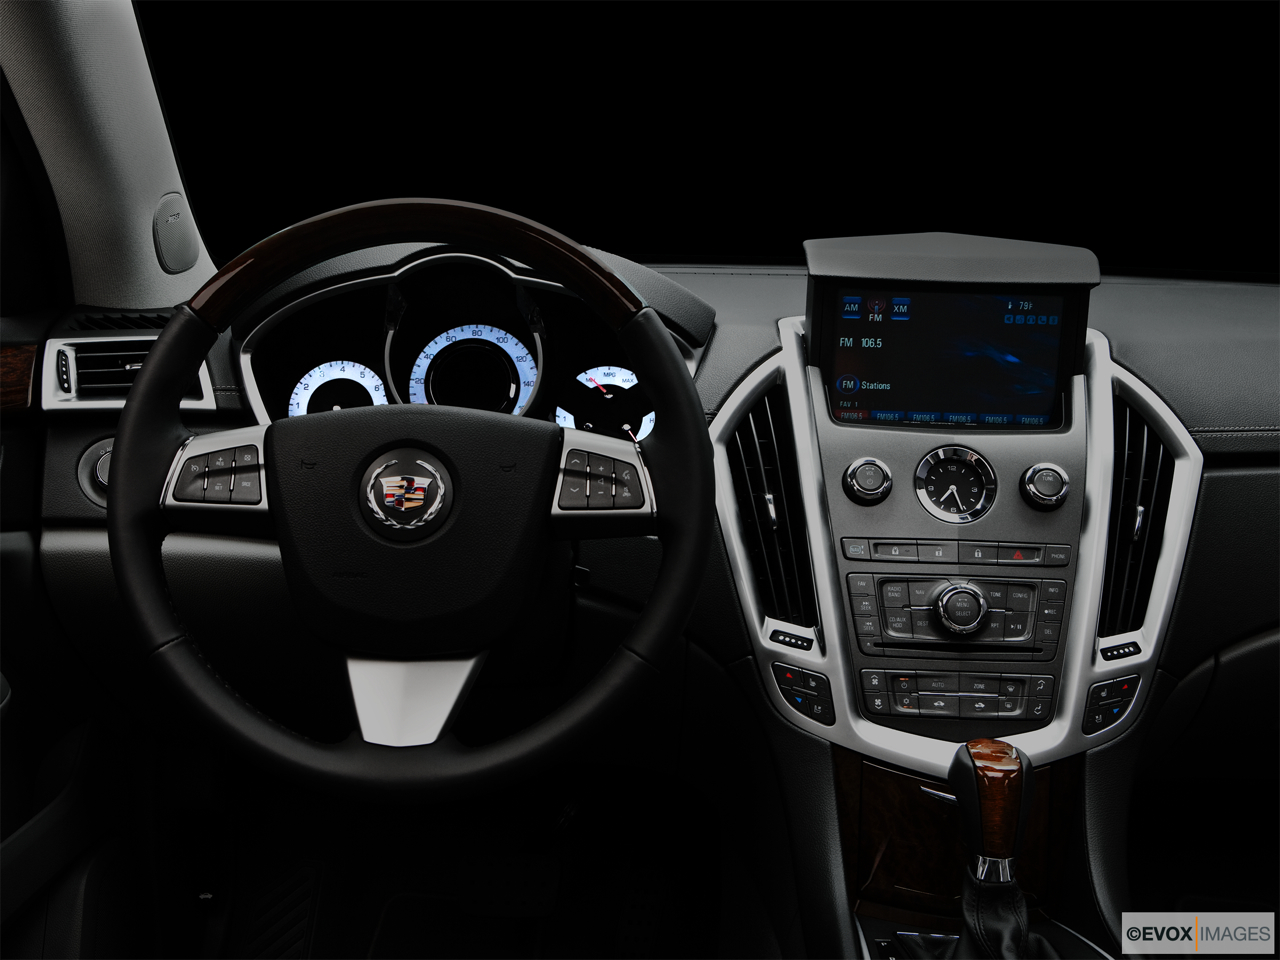 2010 Cadillac SRX Crossover Premium Collection Centered wide dash shot - "night" shot. 